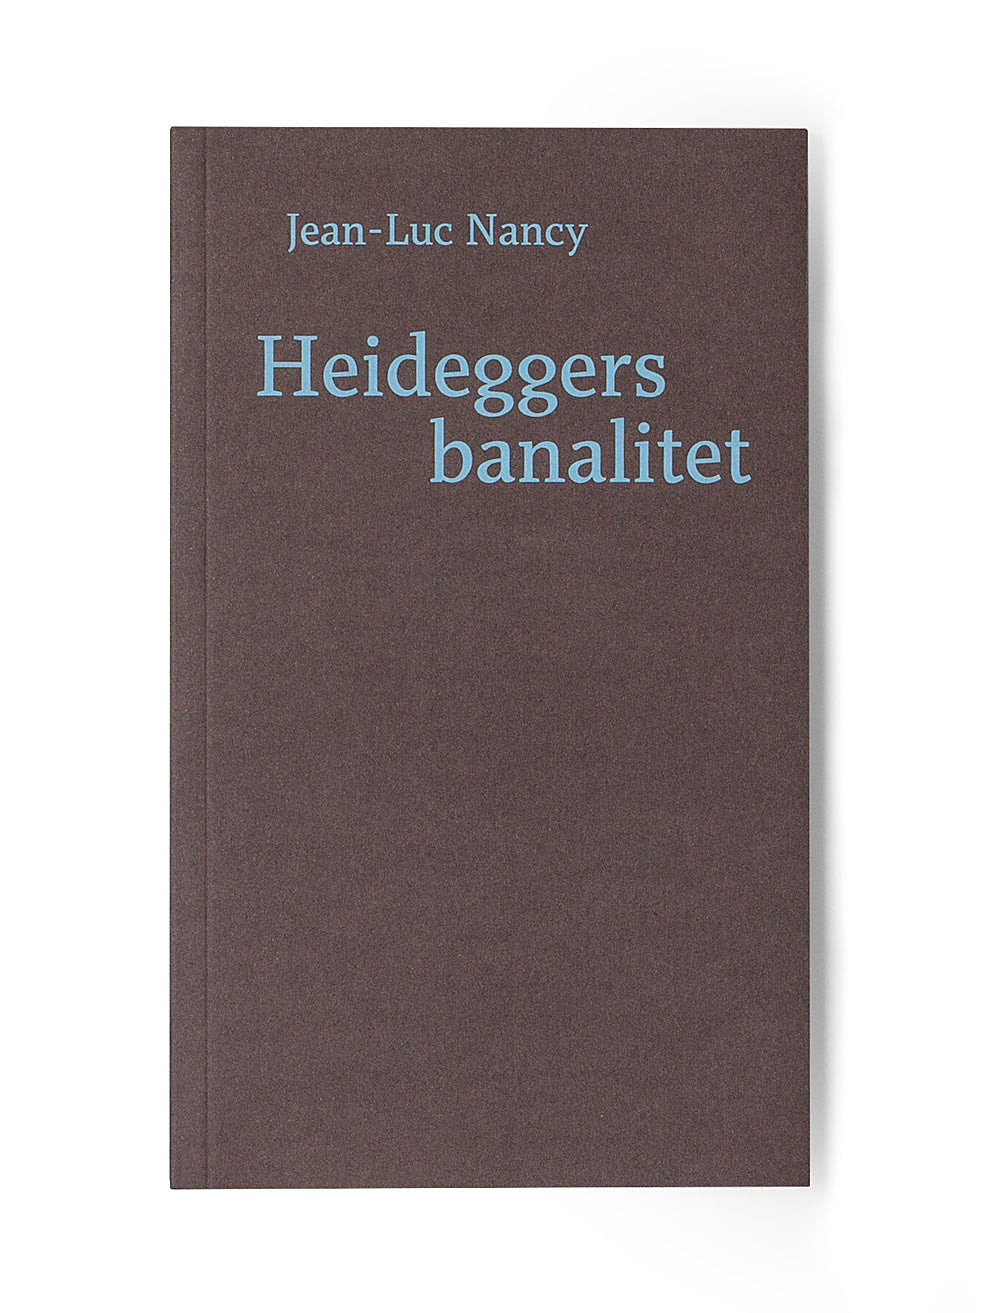 Heideggers banalitet